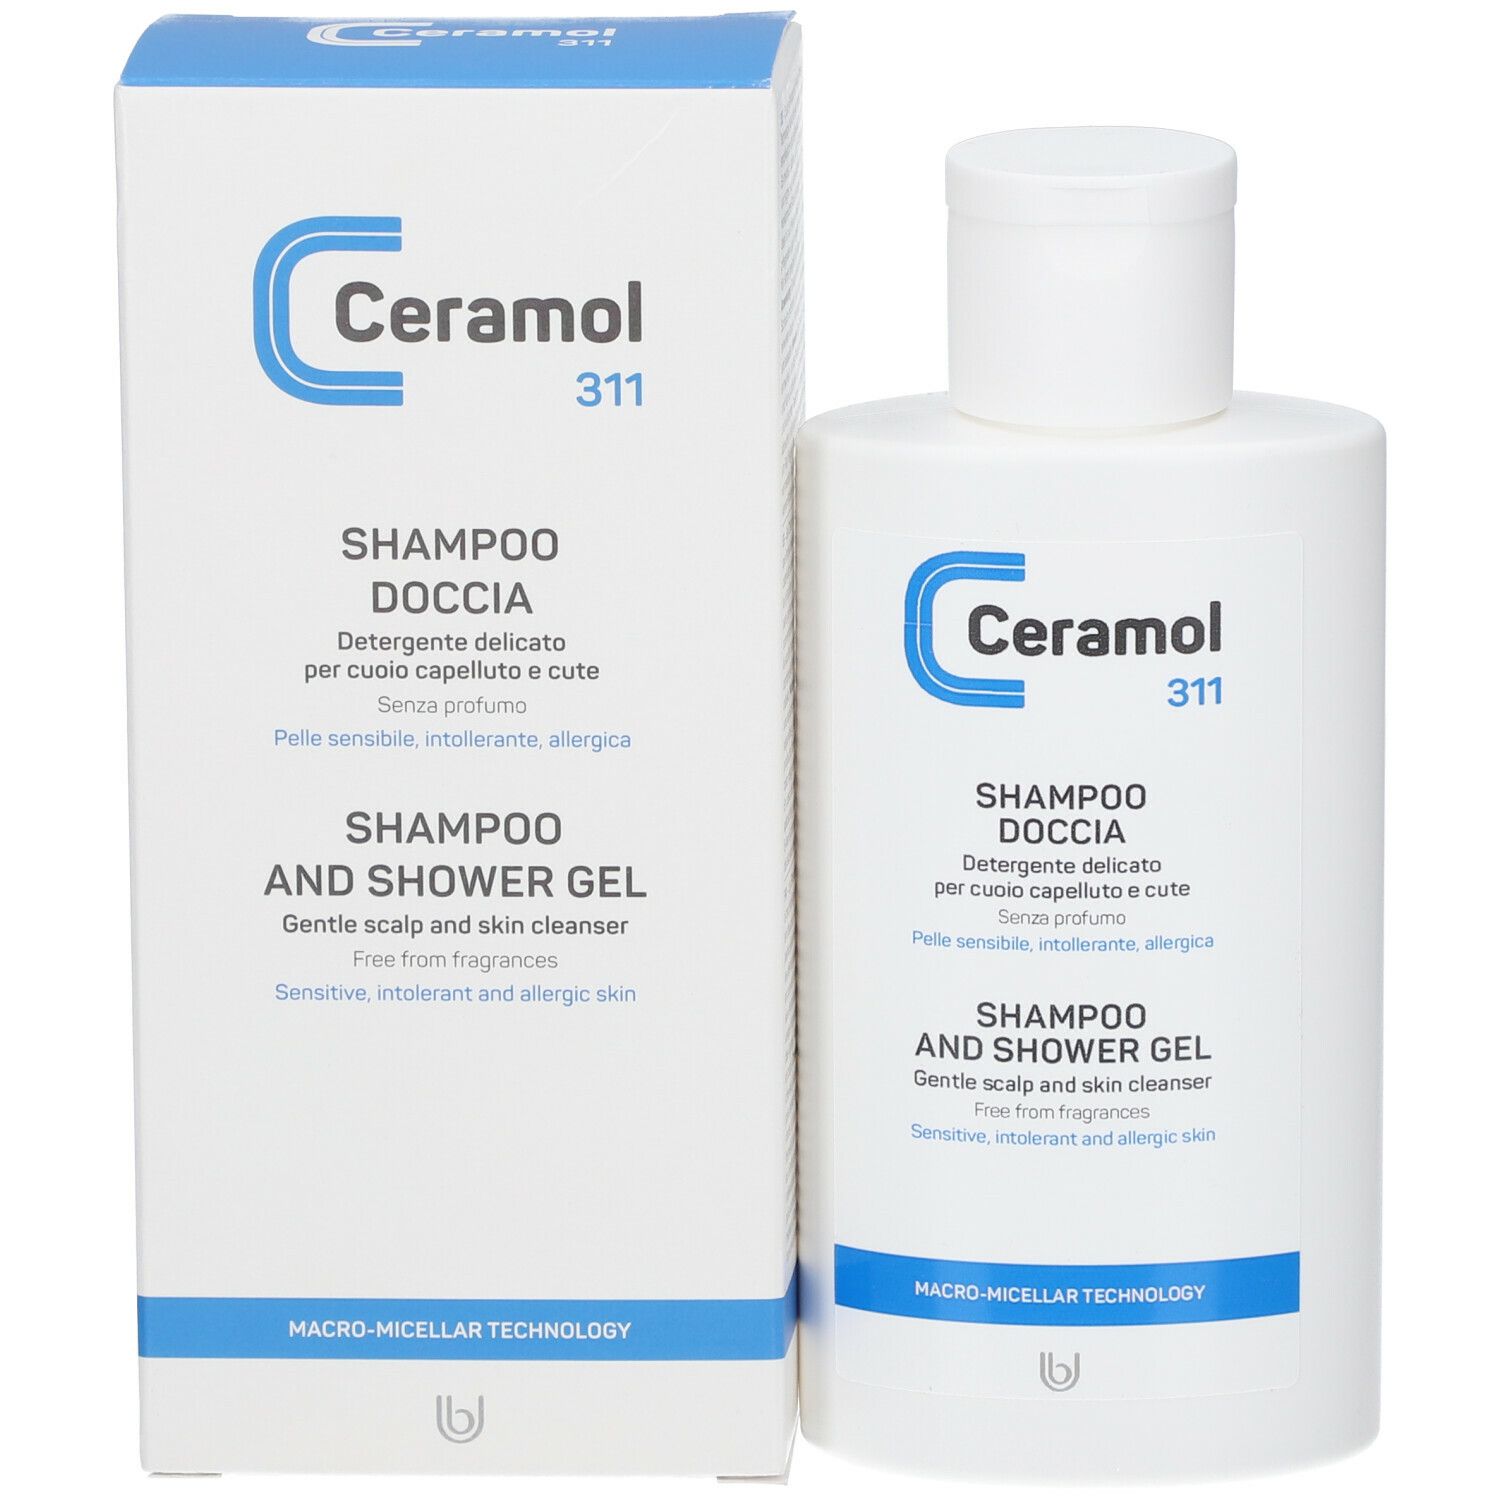 Ceramol 311 Shampoo Doccia